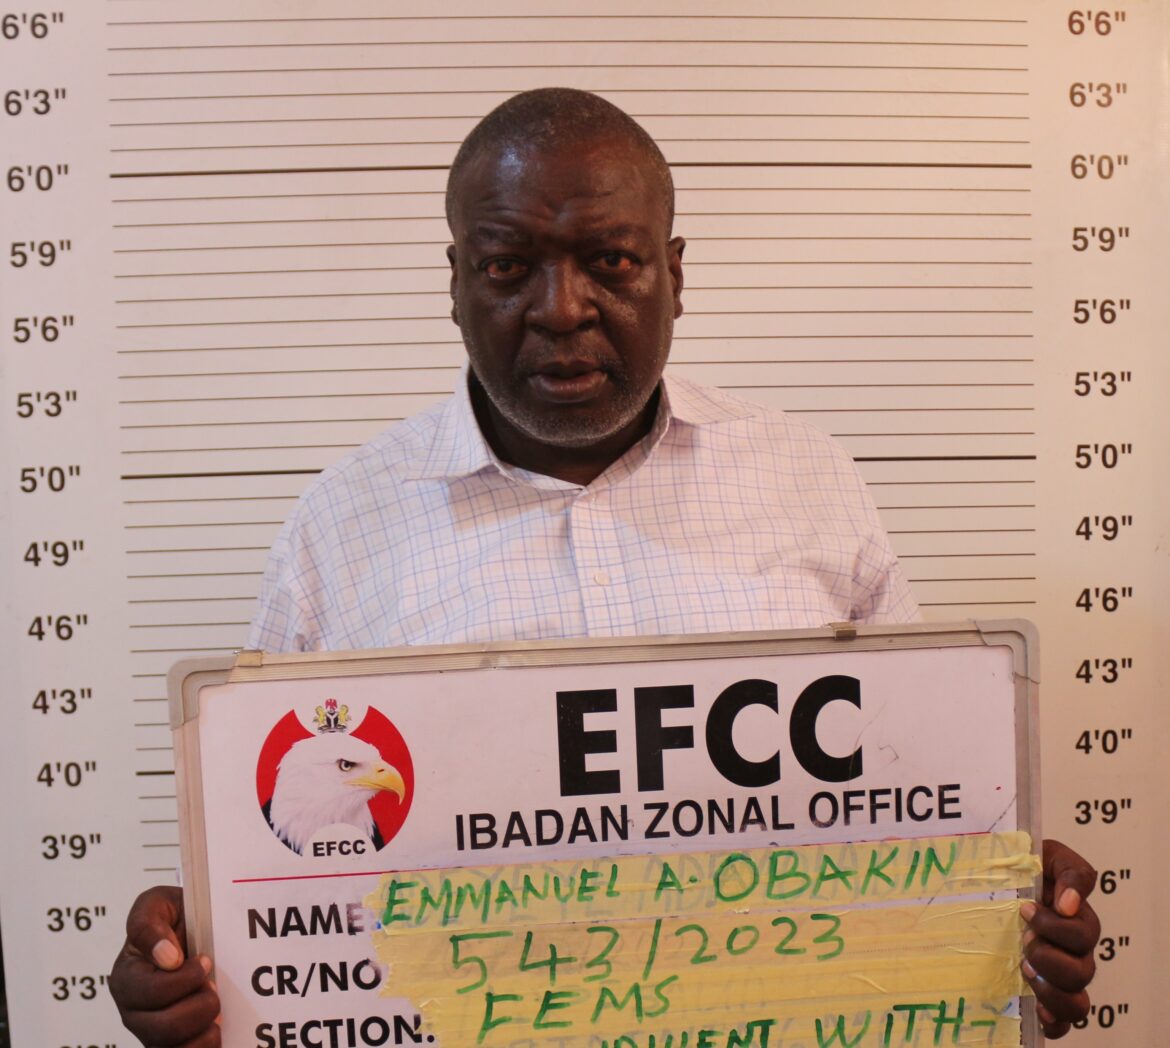 EFCC arraigned man for stealing N251.6m in Ibadan